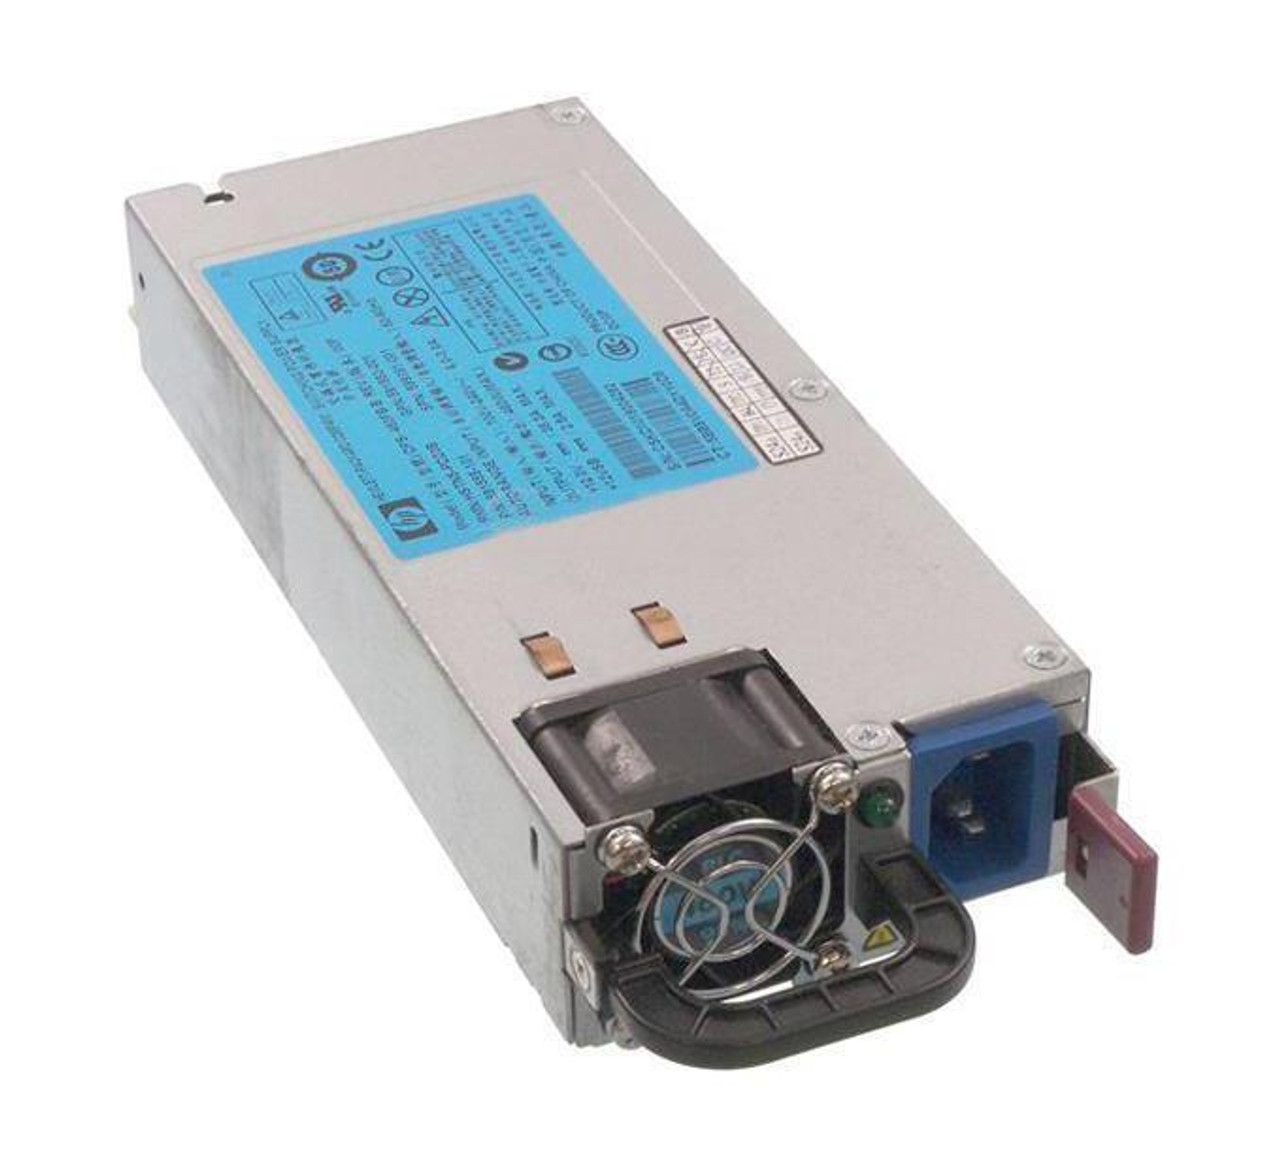 593188-S21 HP 460-Watts Common Slot Redundant Hot Swap 94% Efficiency Platinum AC Power Supply for ProLiant DL360 DL380 and SL170z G6 Server